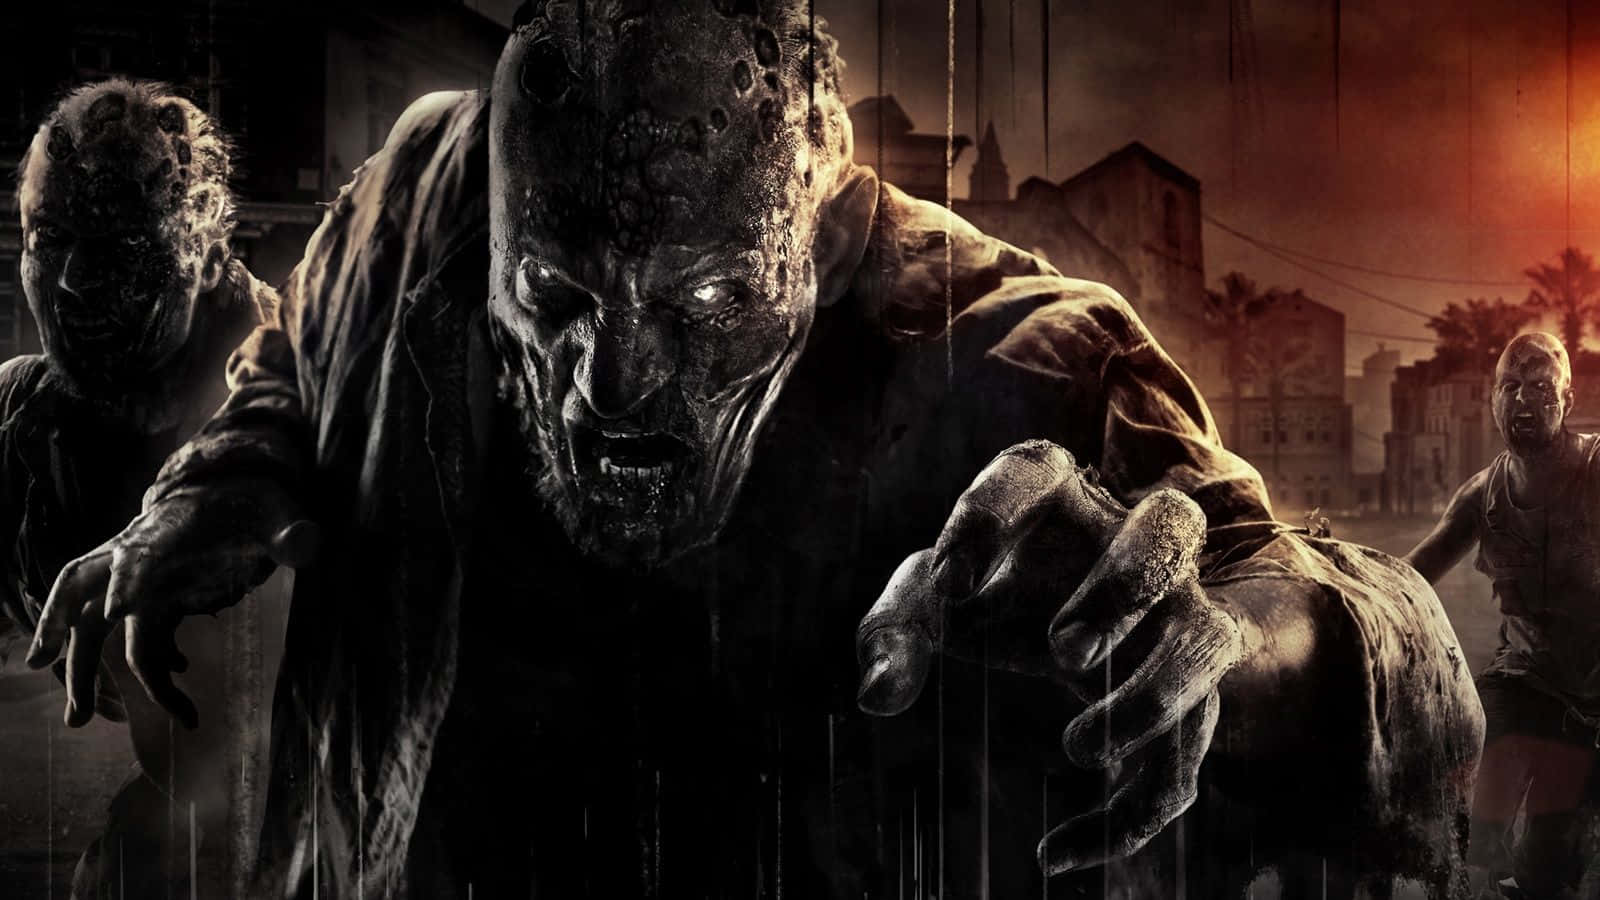 Dying Light 2': A Tense, Dark, Grim Game